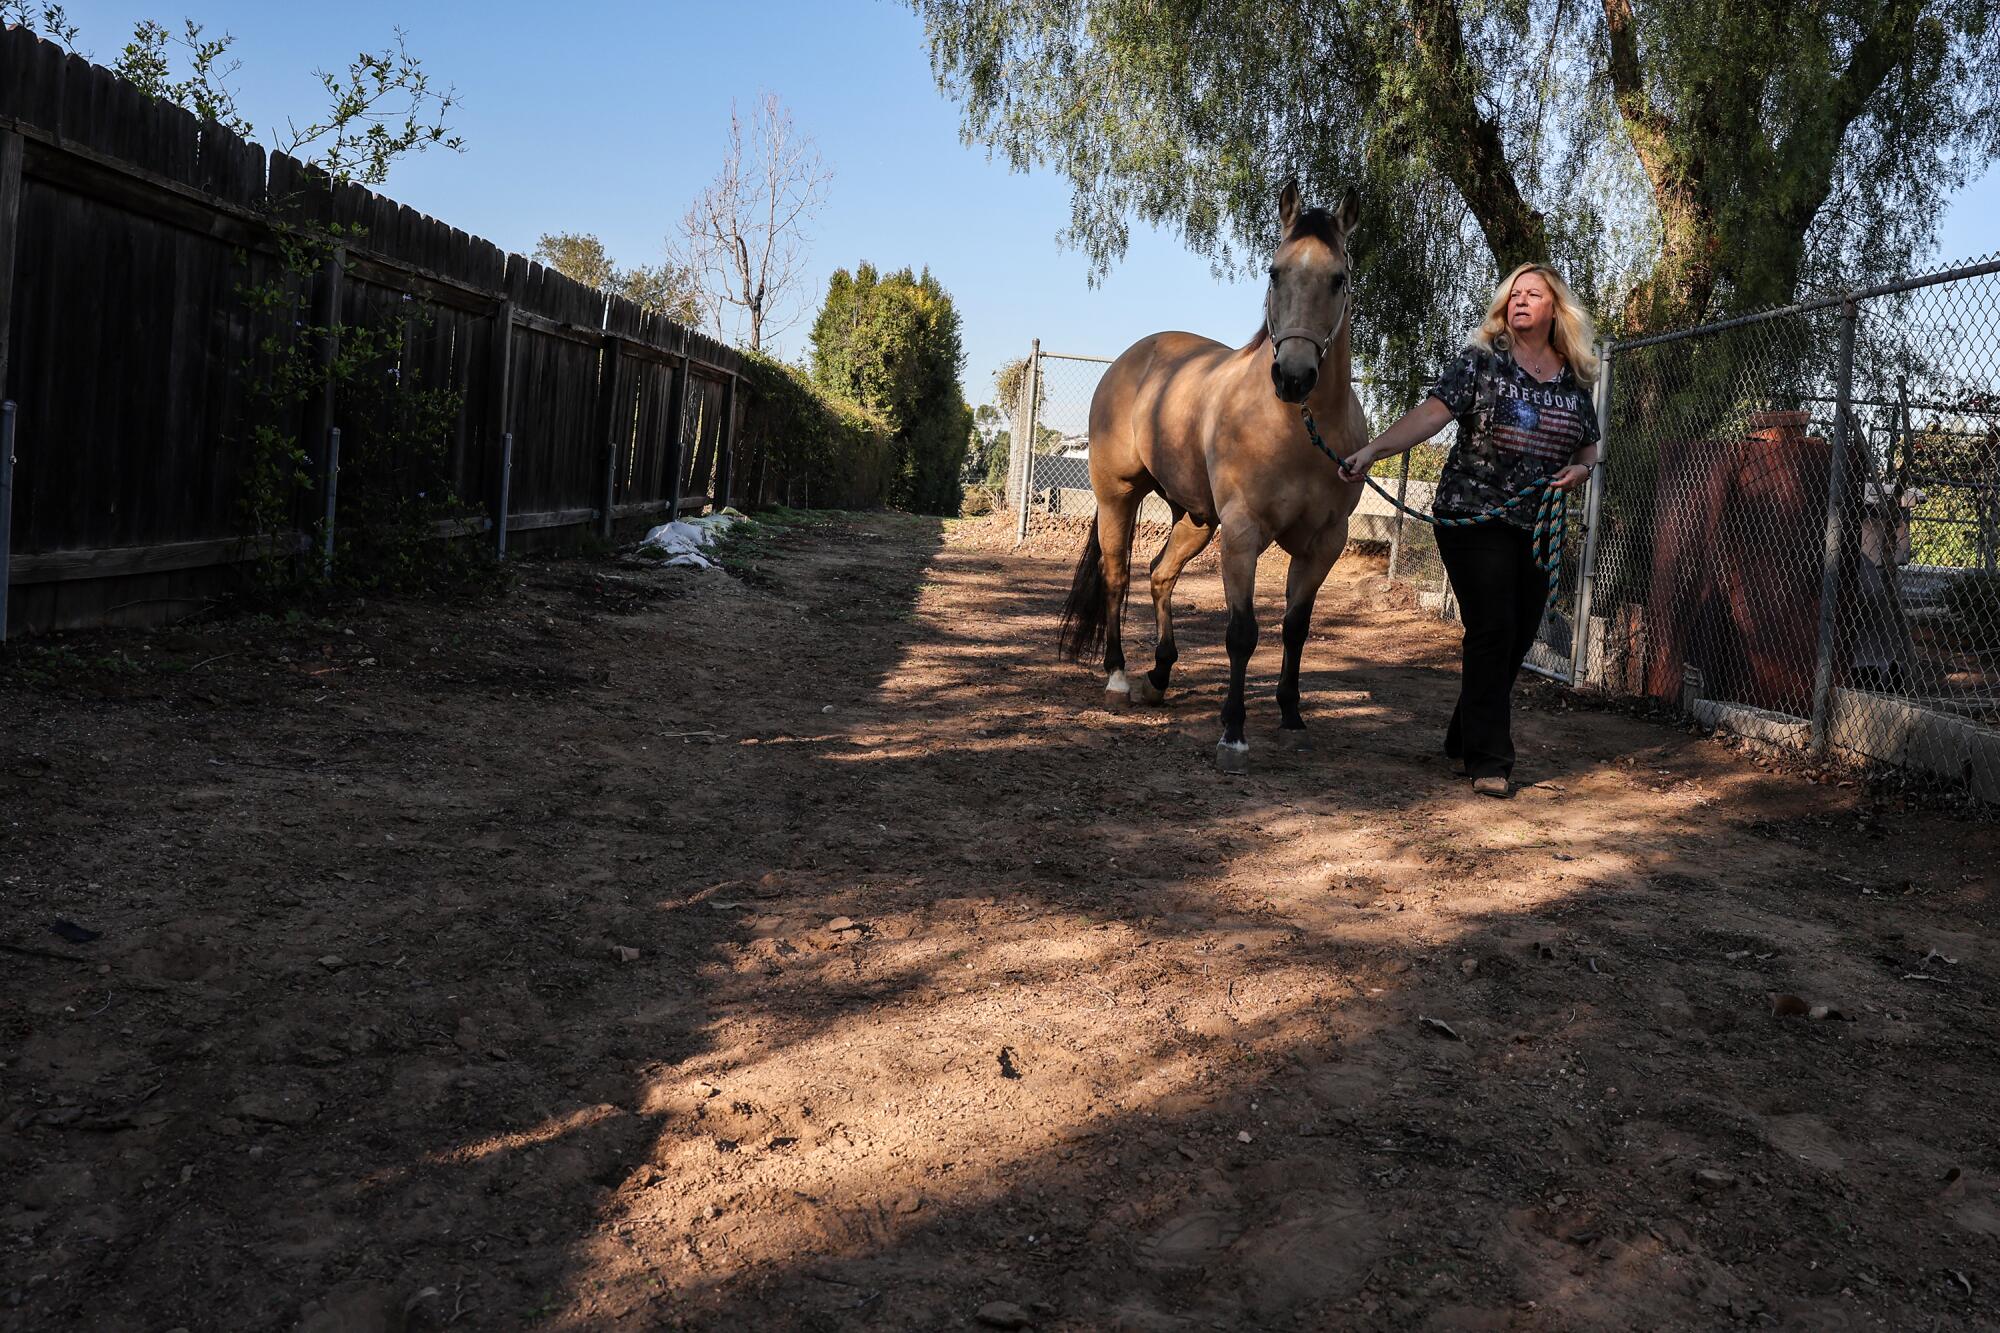 Yorba Linda resident Dee Dee Friedrich walks with her horse, Wyatt, on a horse trail near her home.